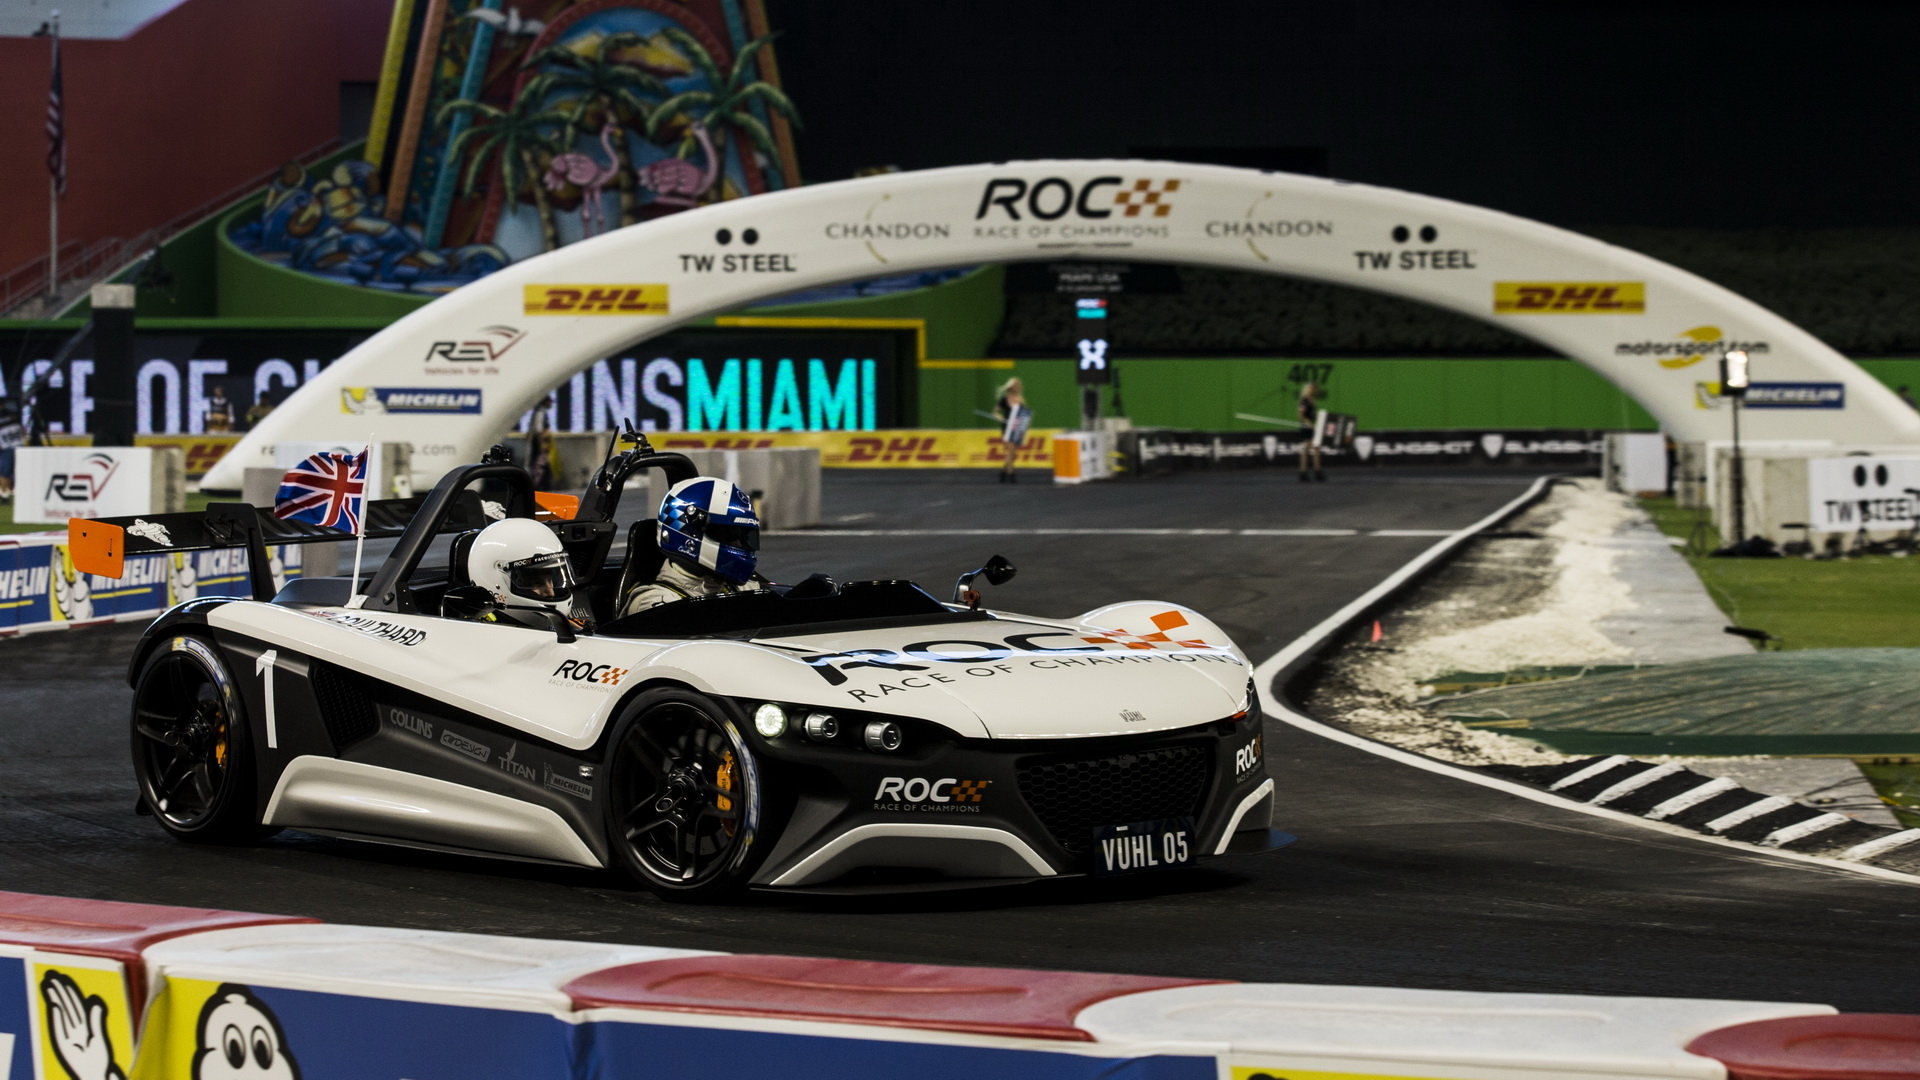 Závod šampionů 2017 v Miami - Coulthard s vozem VUHL 05